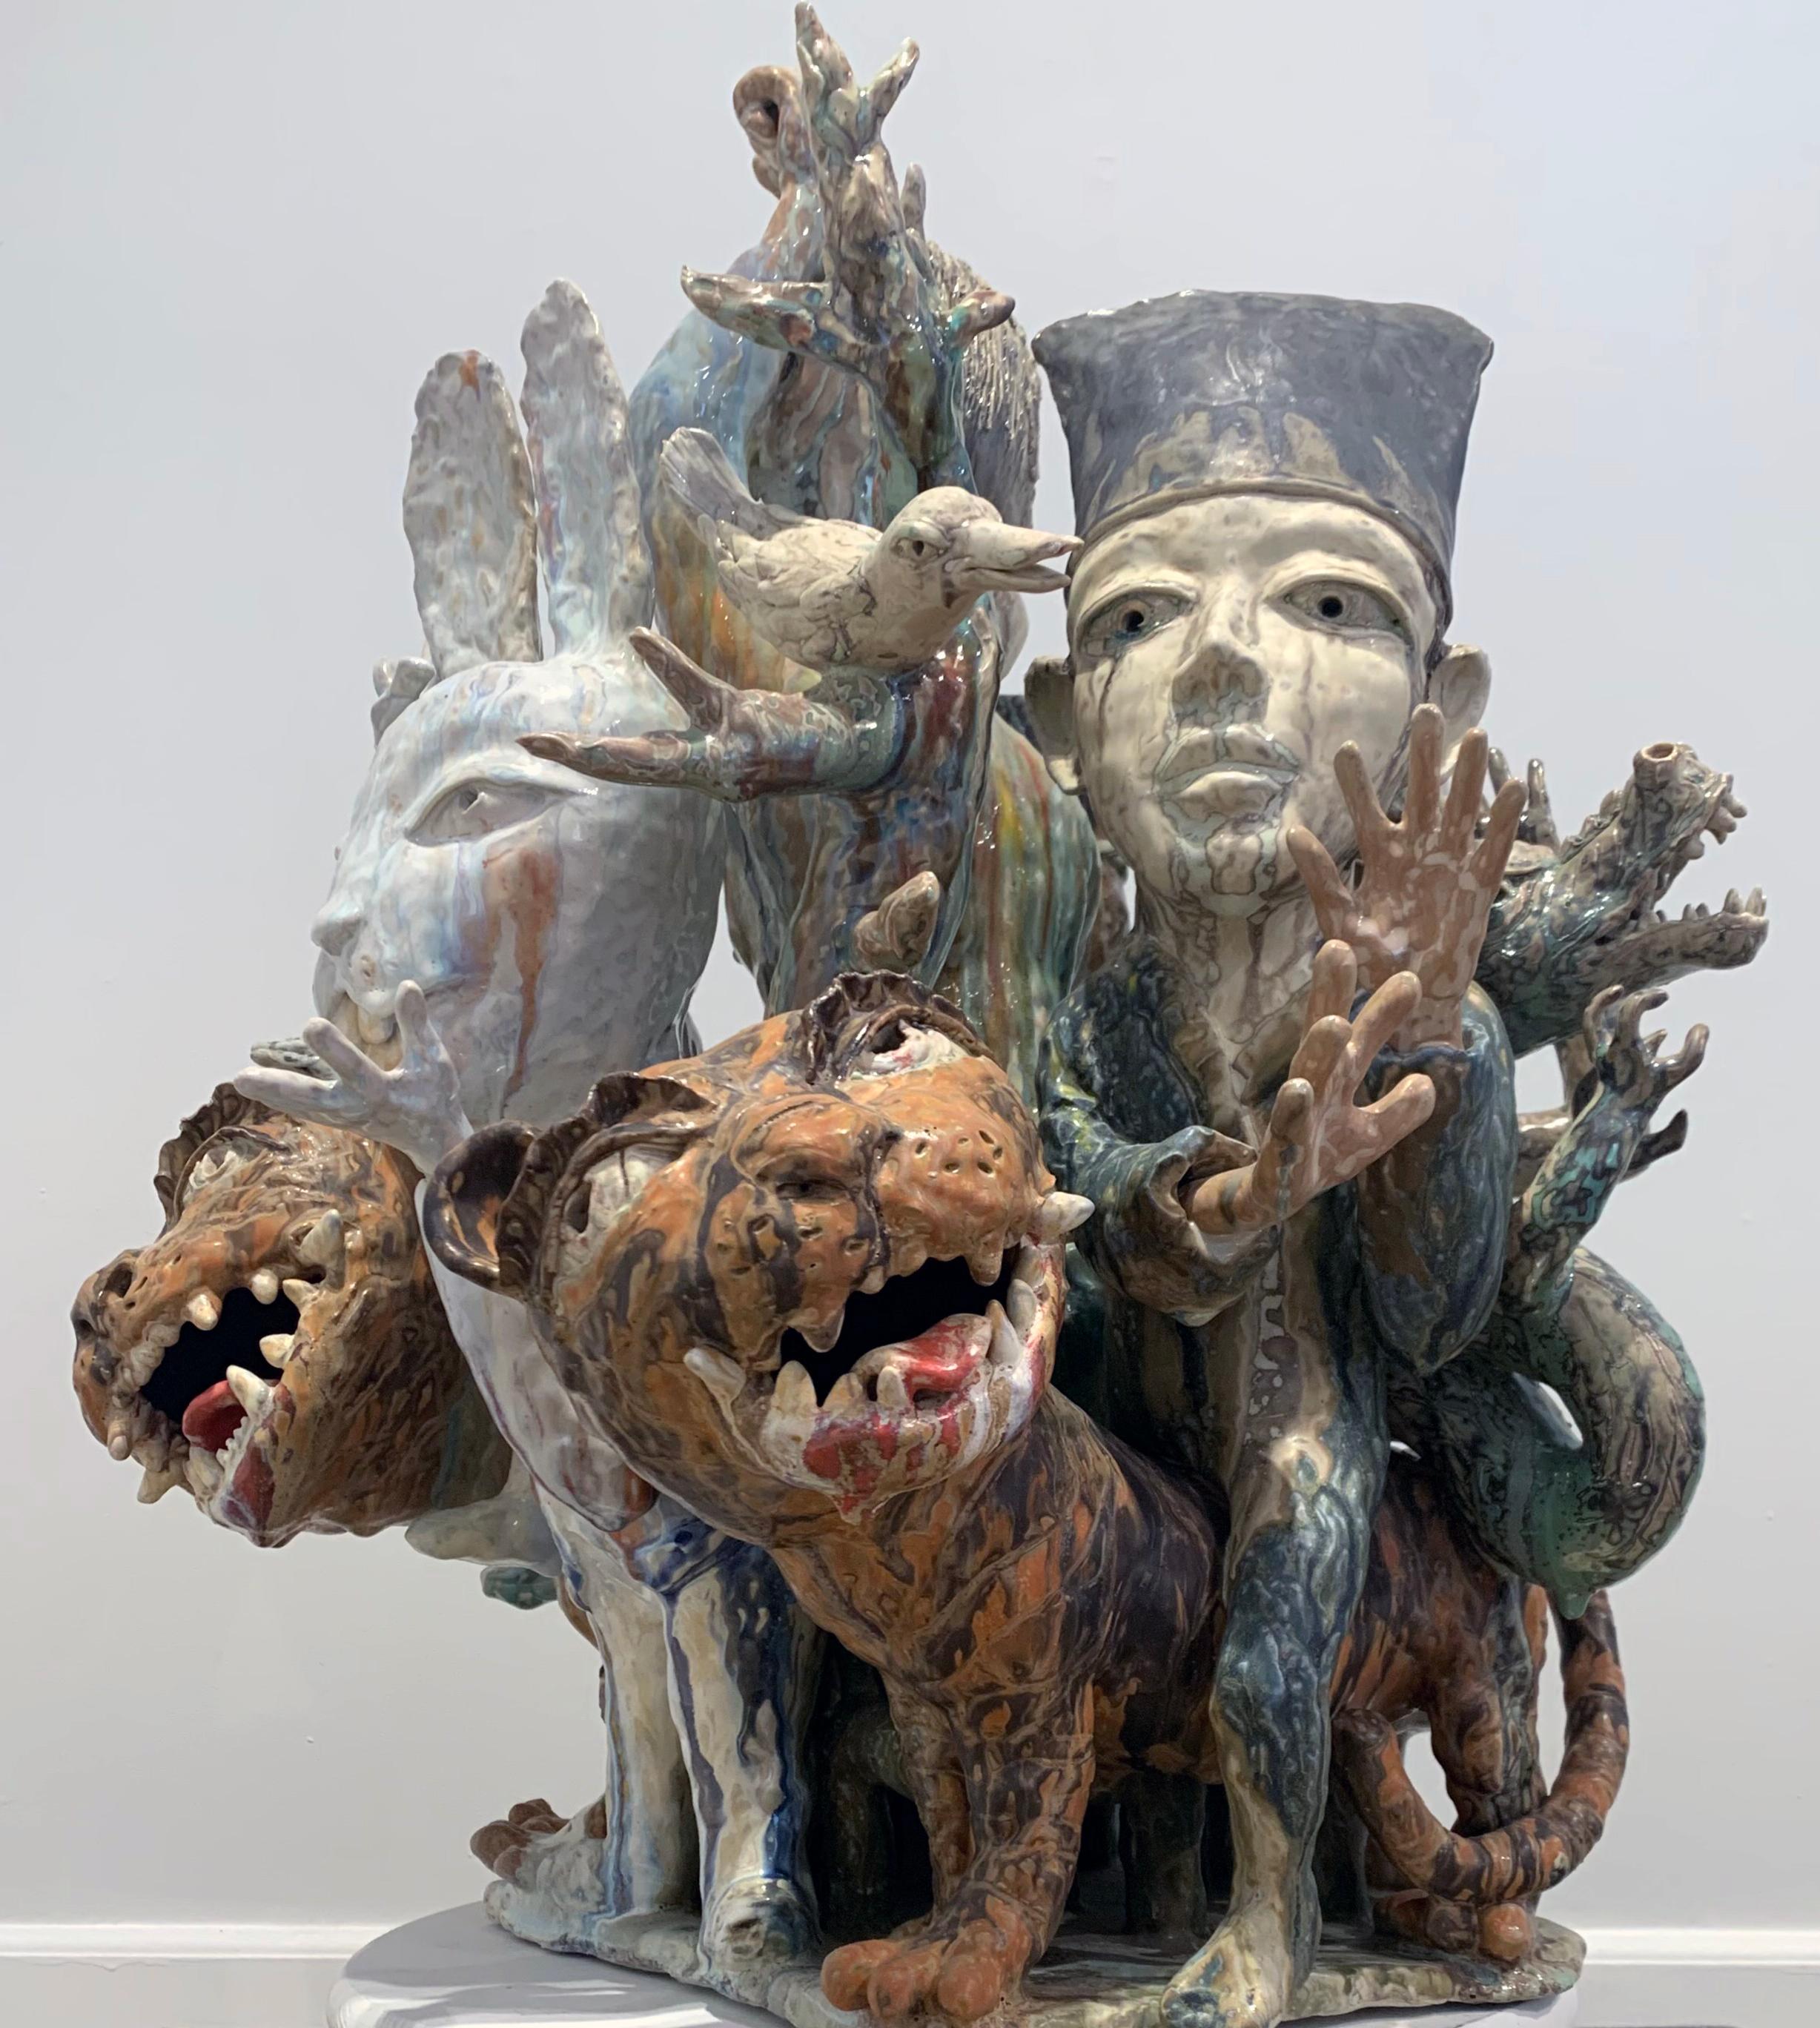 SunKoo Yuh Figurative Sculpture - "Be Brave", Figurative Glazed Porcelain Sculpture, Animals, Ceramic, Dynamic